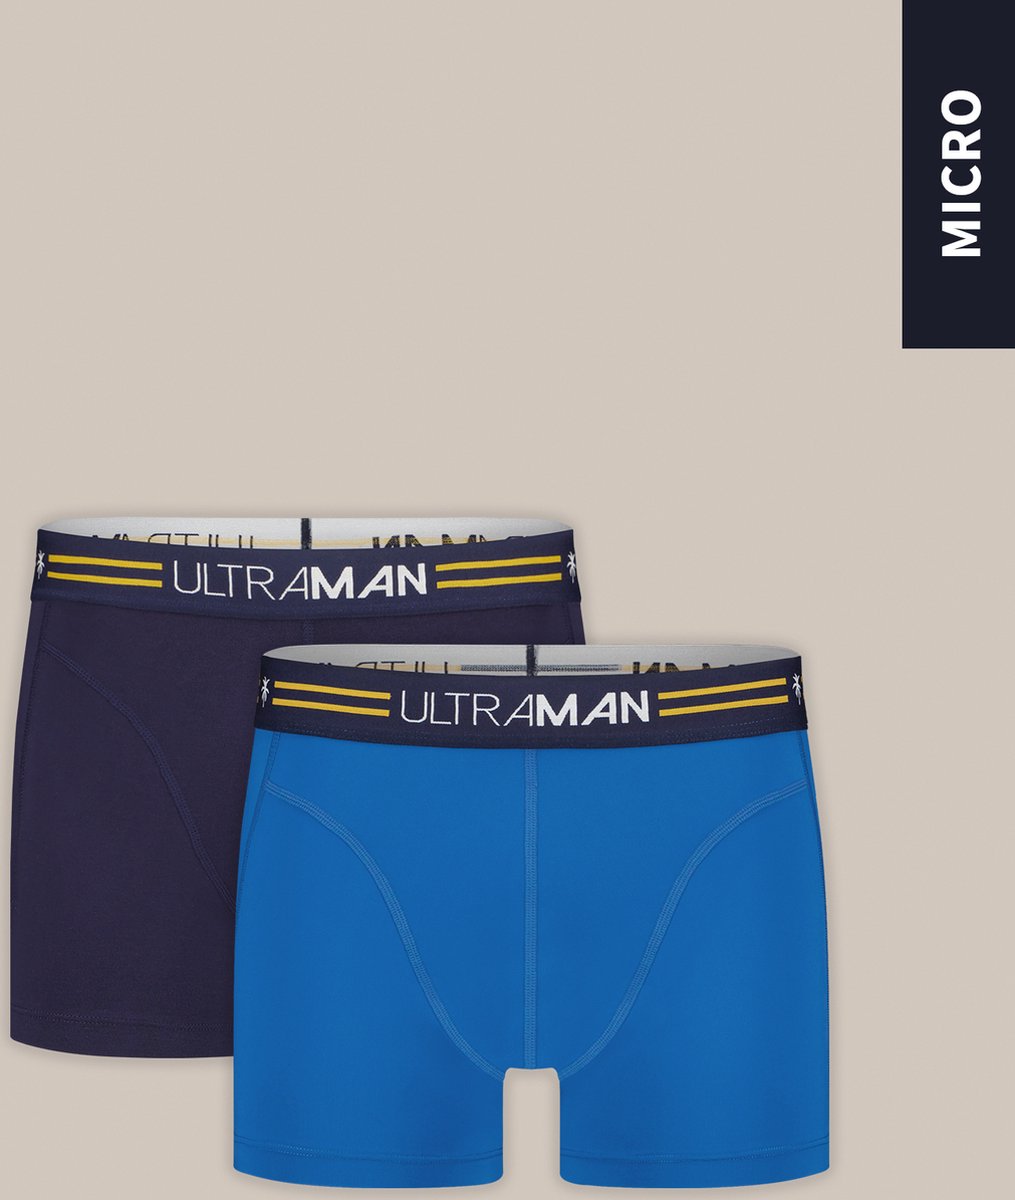 Sapph & Ultraman - 2-pack boxershort heren / ondergoed heren - Blauw - Microstof - Sneldrogend - L